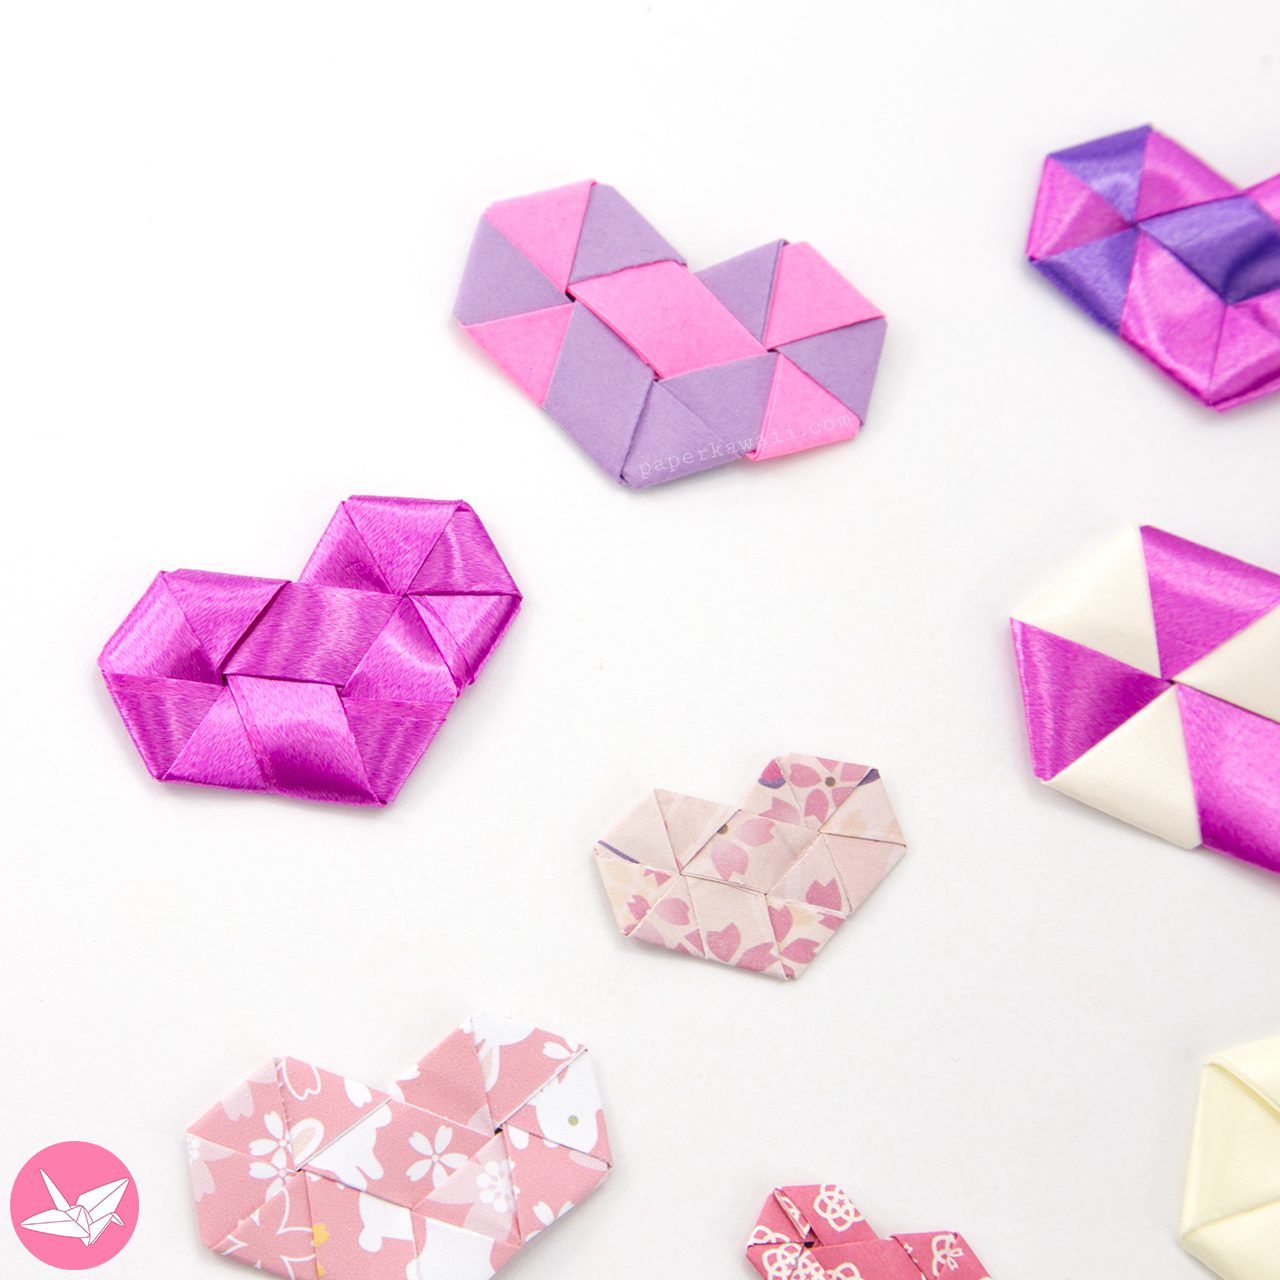 Origami Woven Hearts Tutorial Paper Kawaii 05